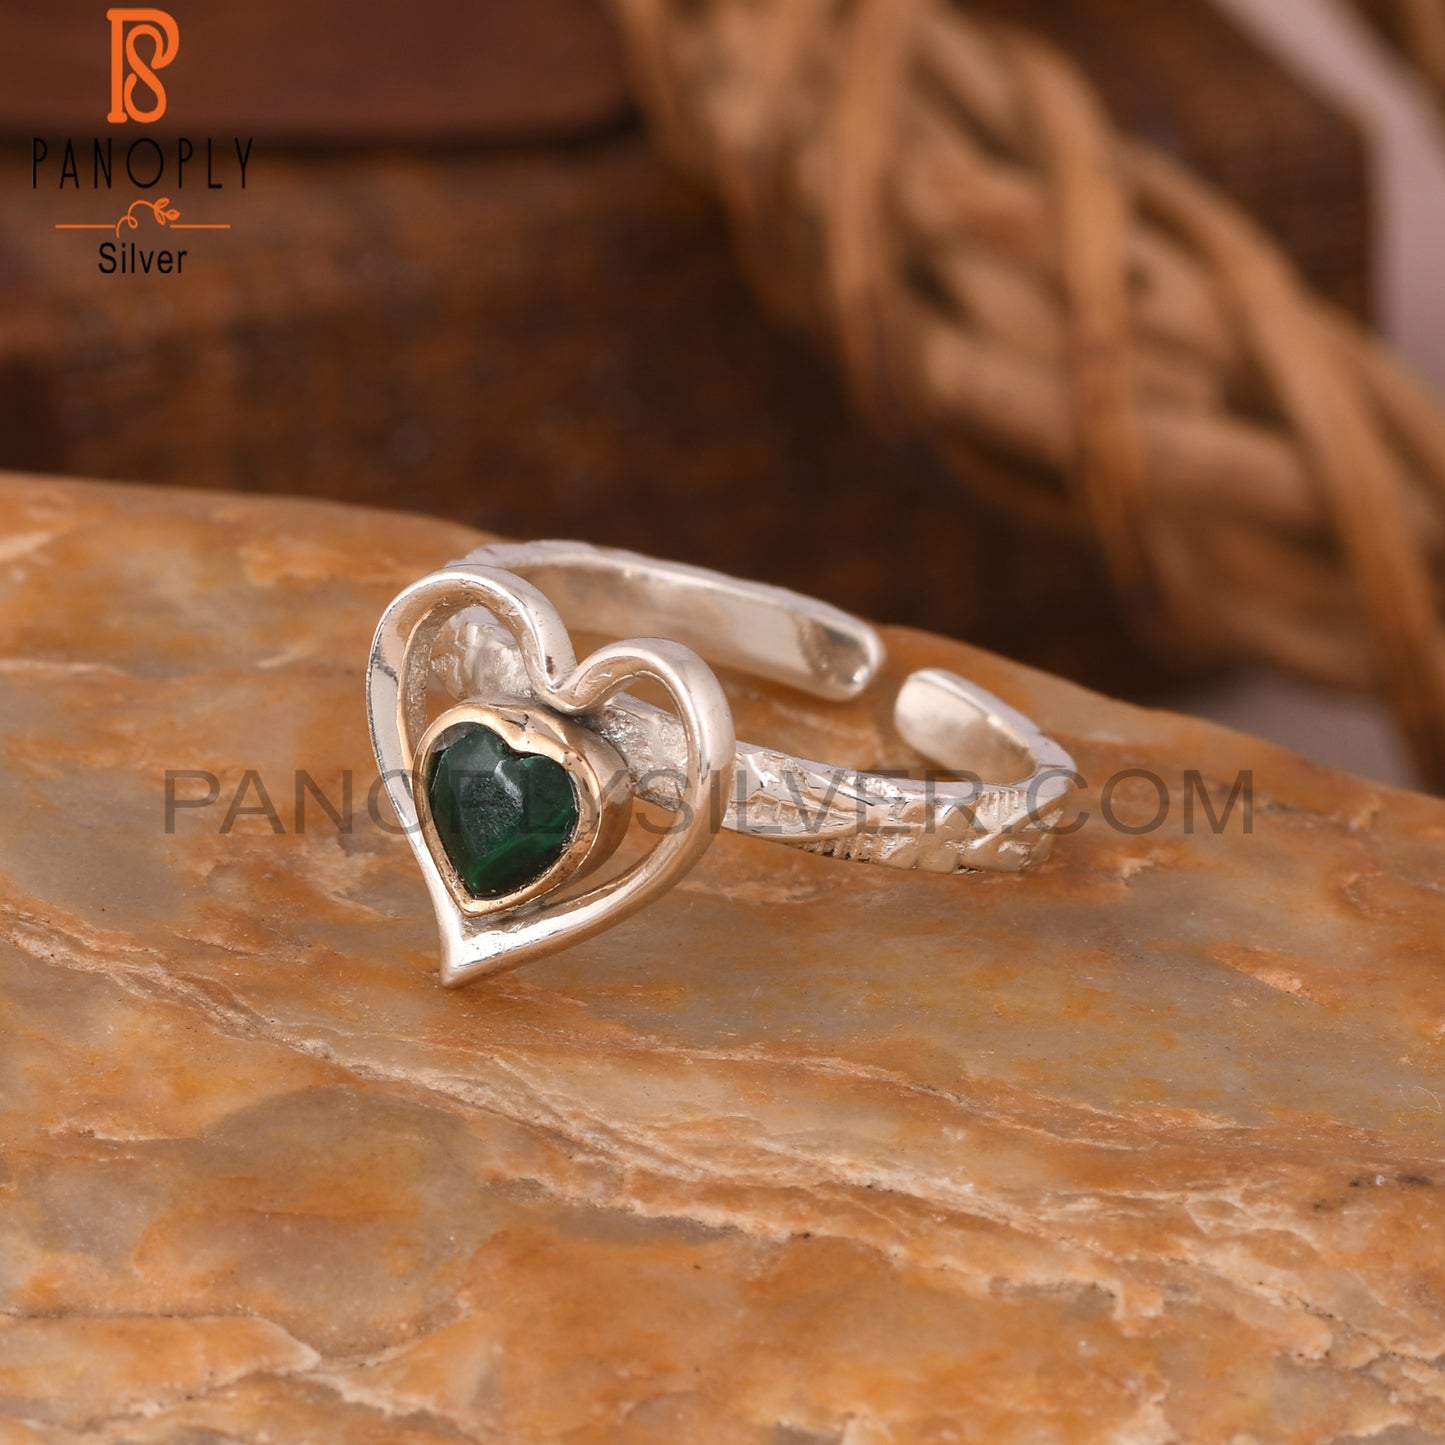 Malachite Heart 925 Sterling Silver Ring